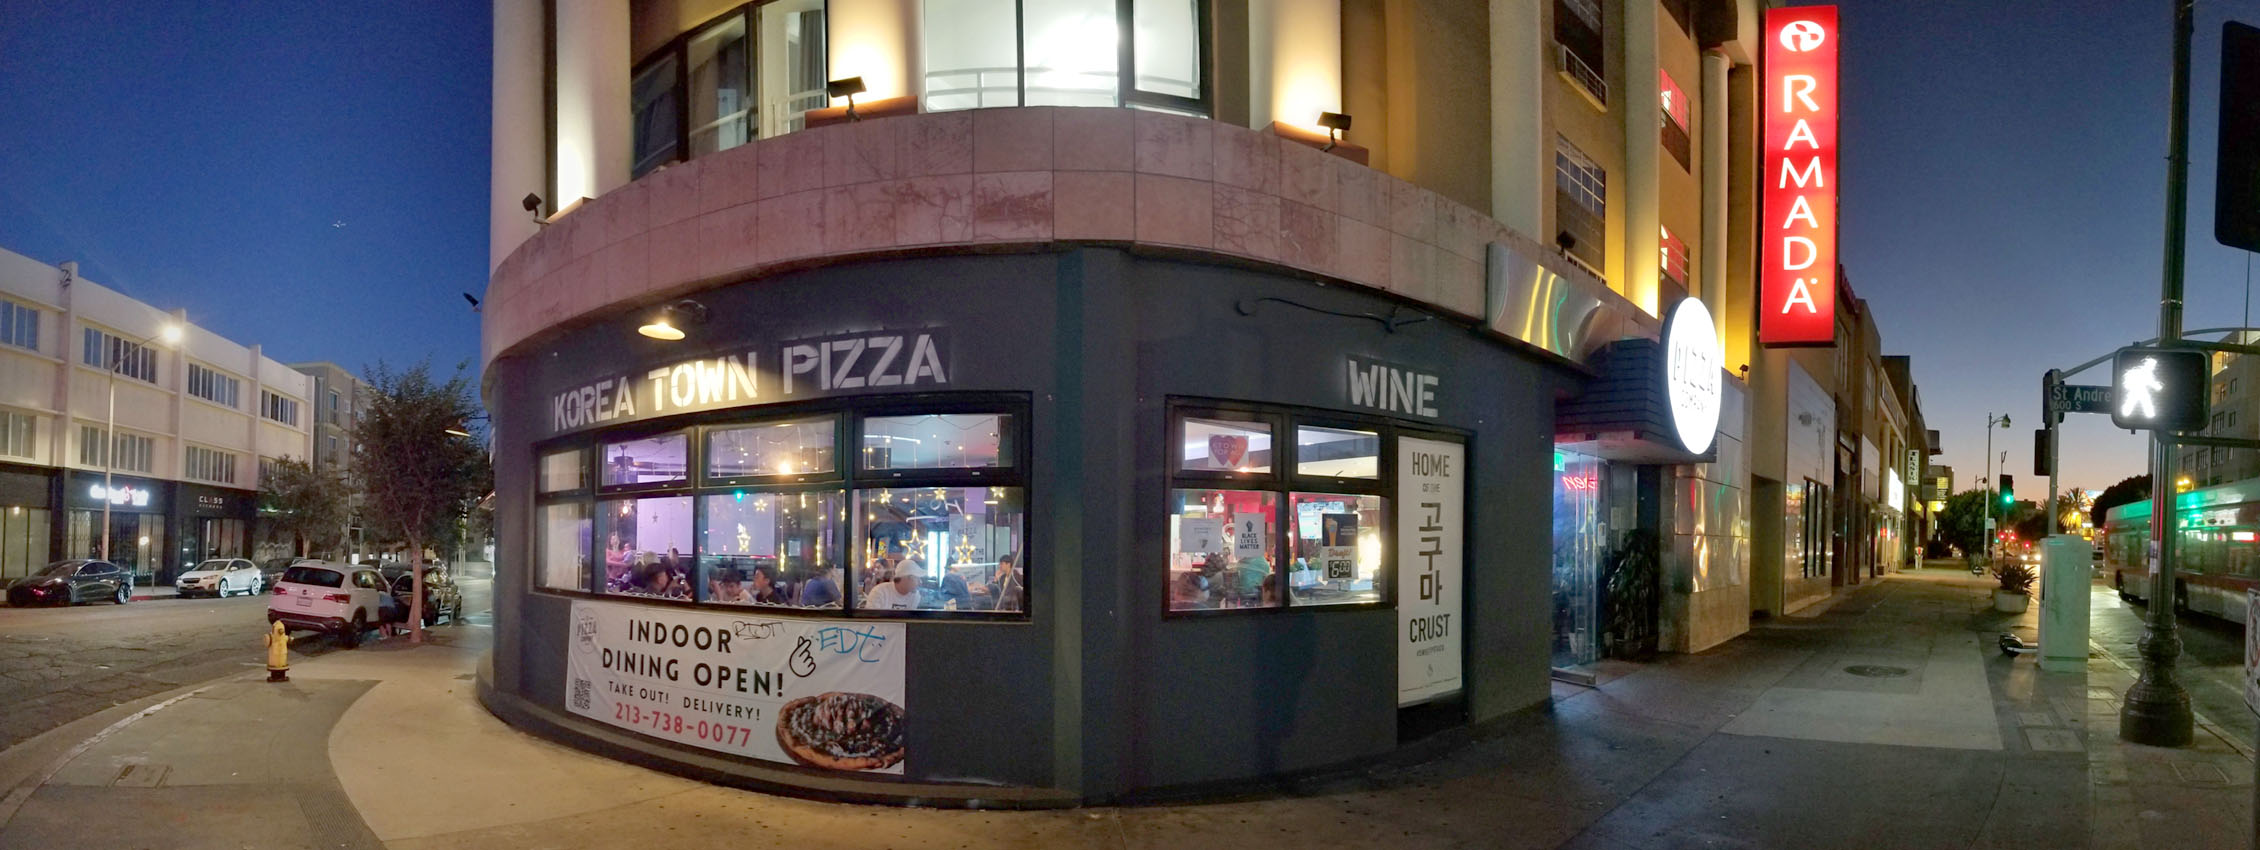 Koreatown Pizza Co Exterior